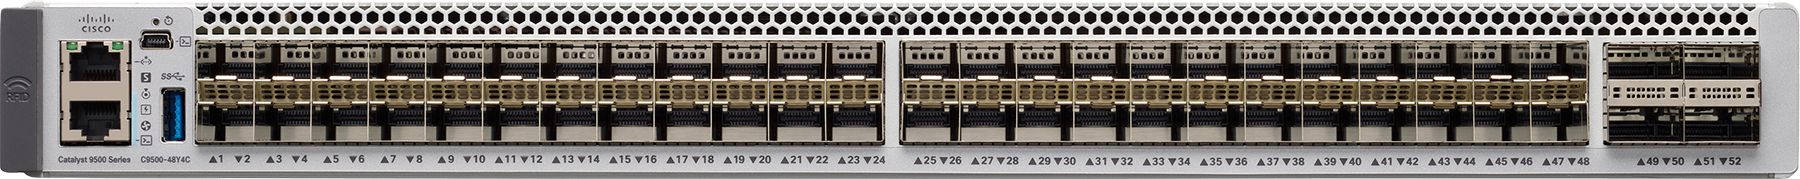 C9500-24Y4C: Cisco Catalyst 9500 Series high-performance switch with 24x 1/10/25G Gigabit Ethernet + 4x 40/100G Uplink